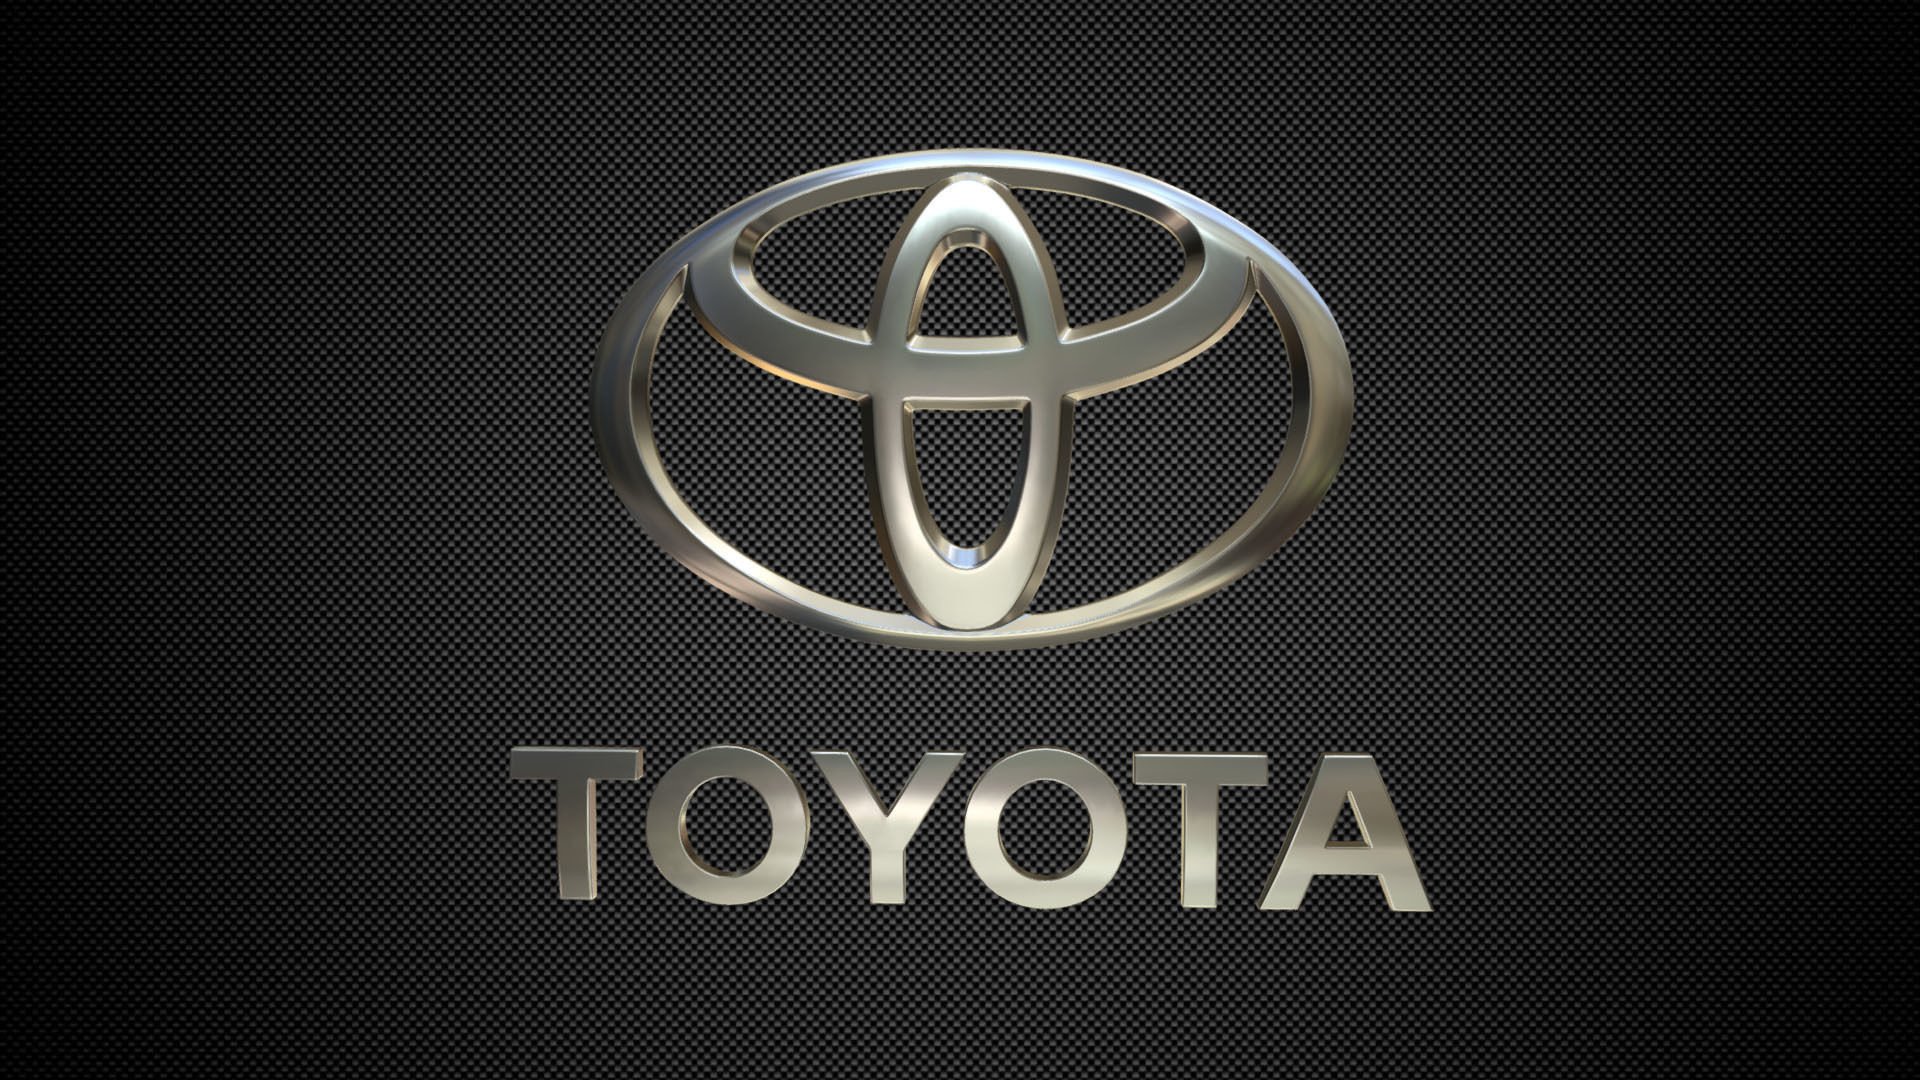 Toyota Motor логотип